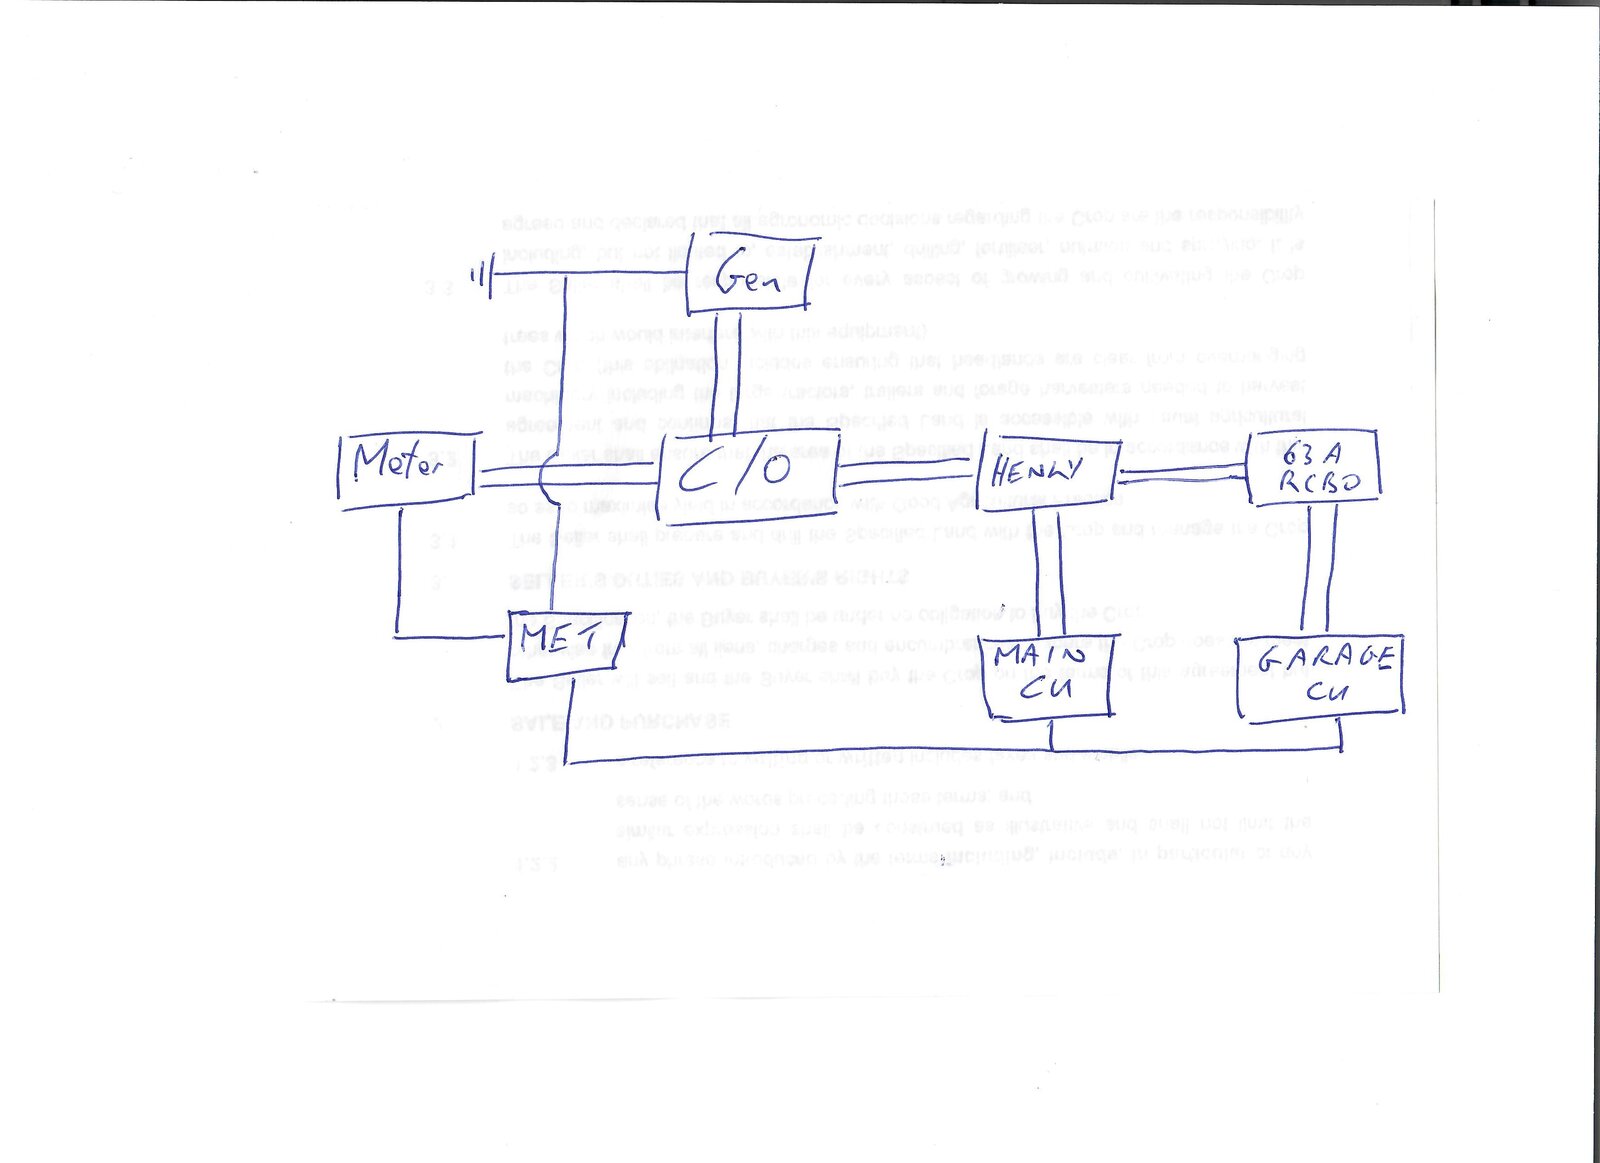 Genny installation wiring diagram v1.jpg